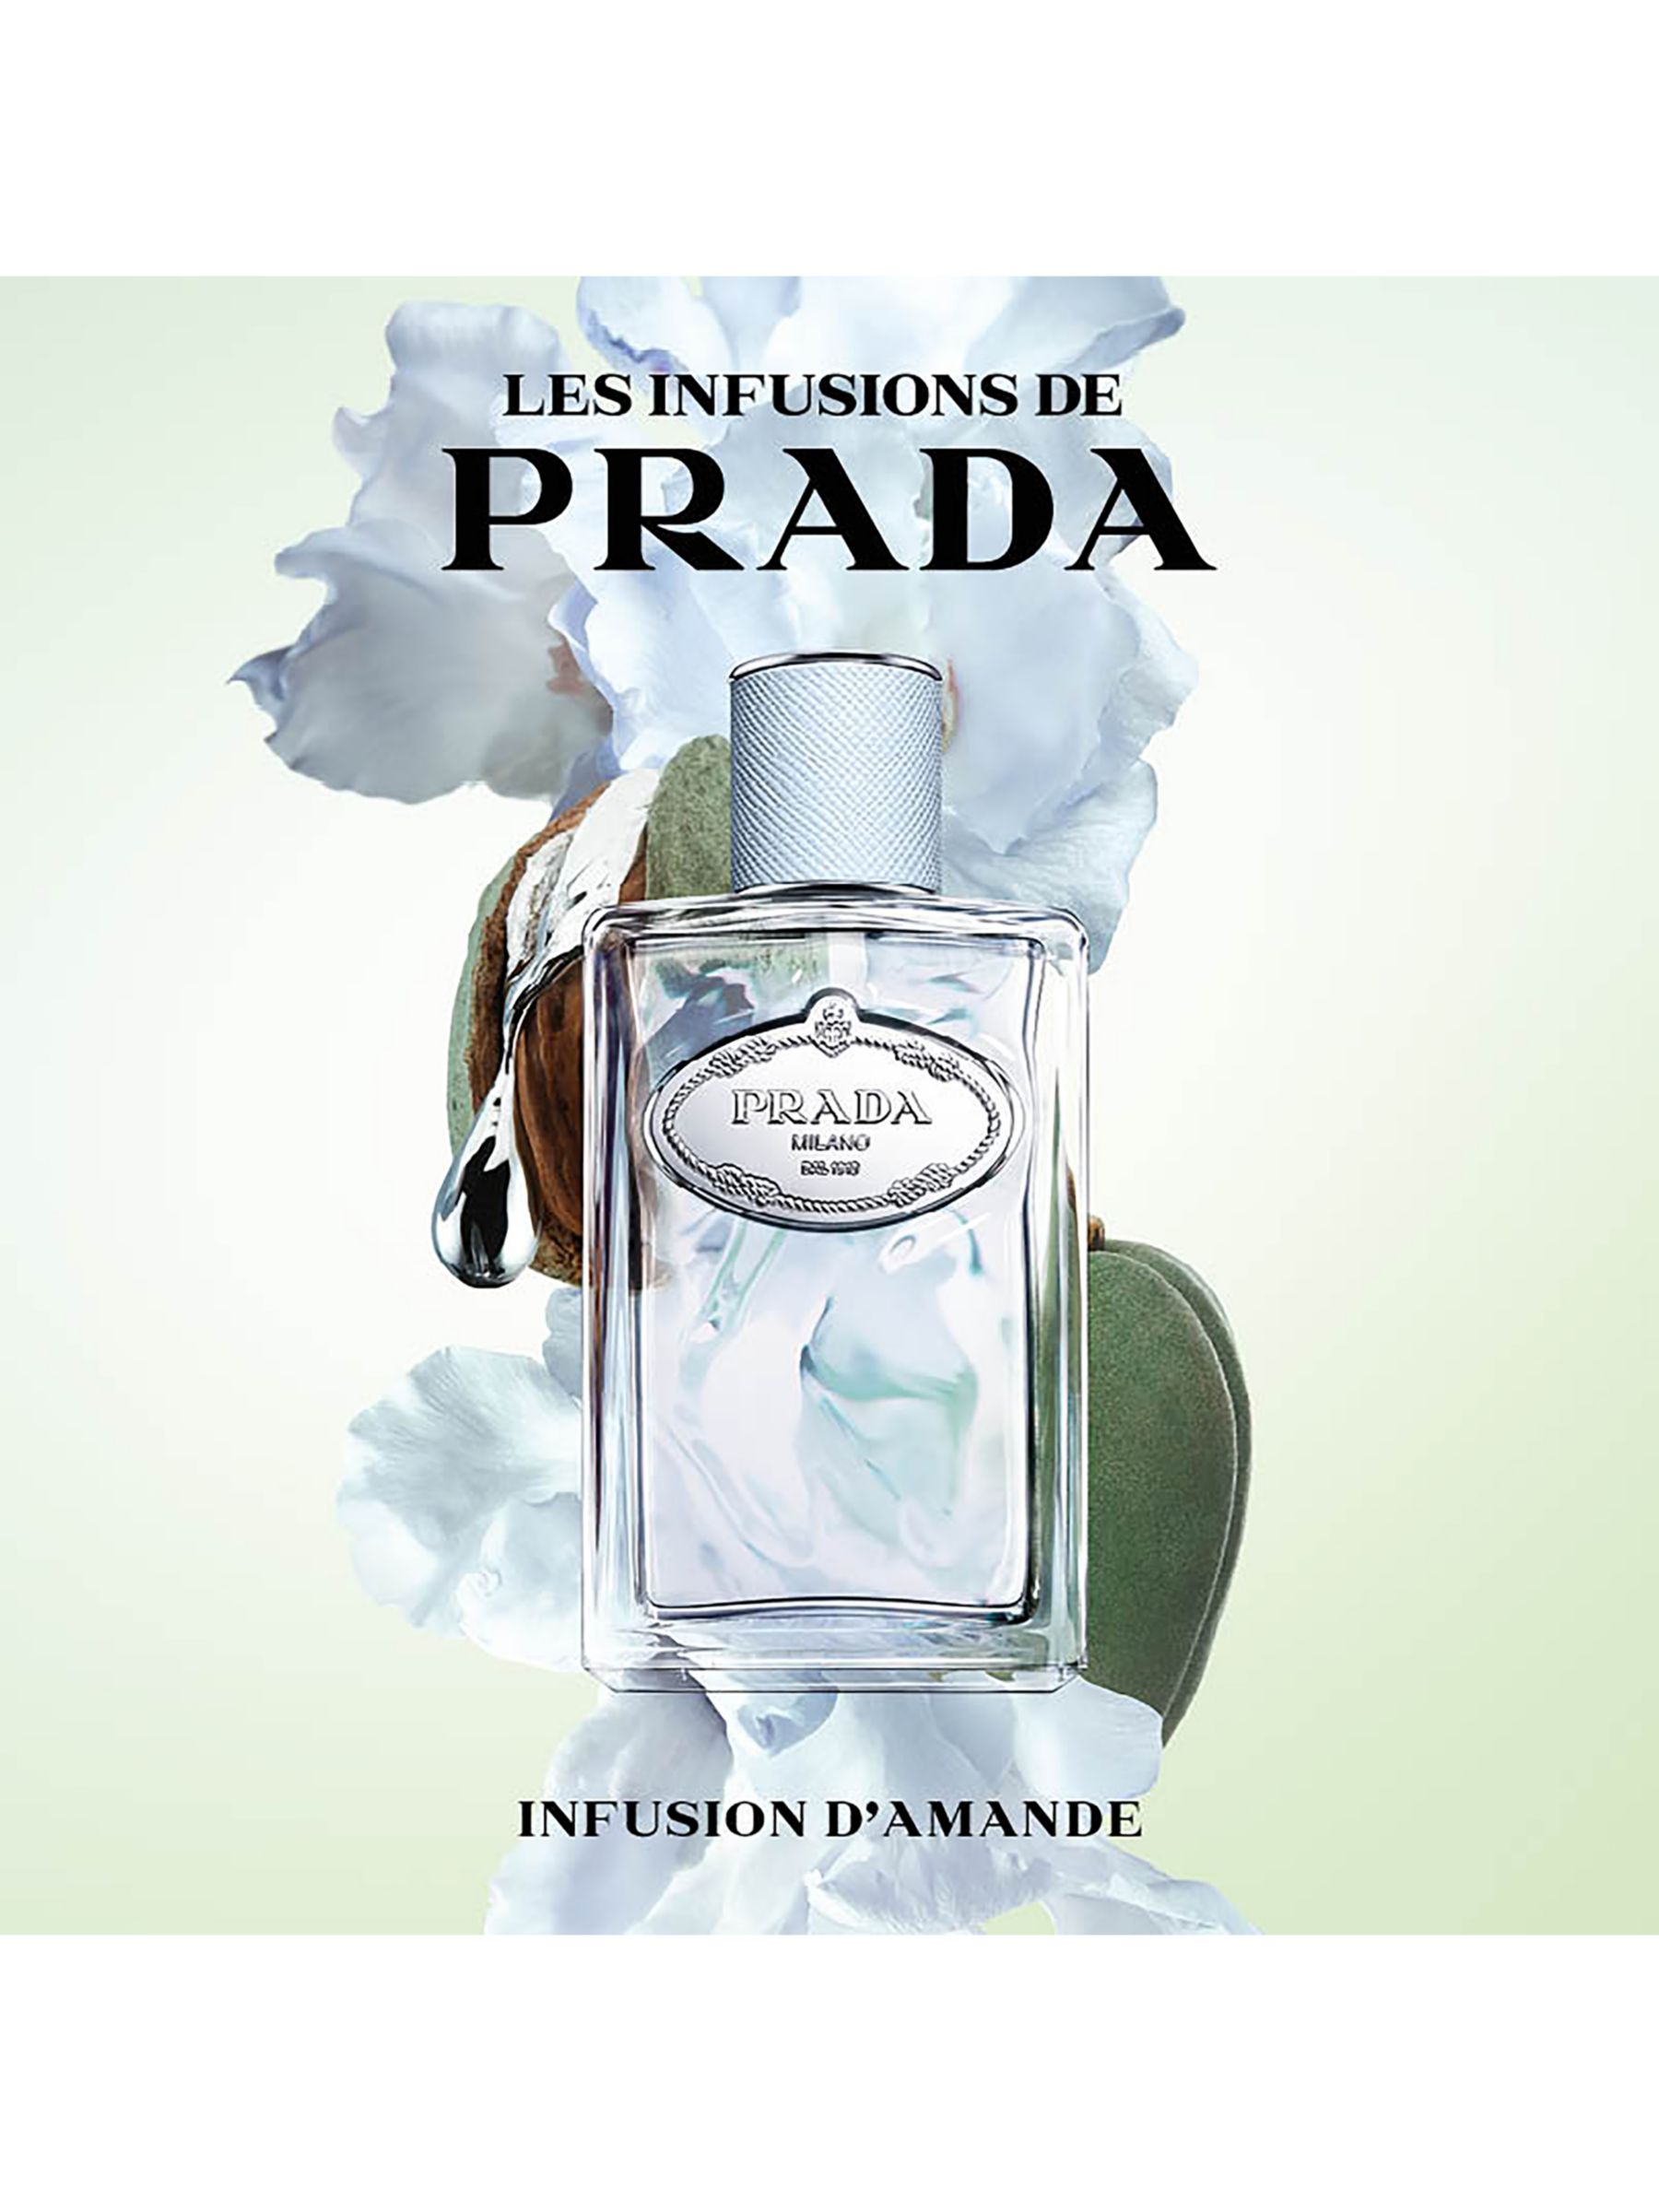 Prada Les Infusions de Prada Amande Eau de Parfum, 100ml at John Lewis &  Partners